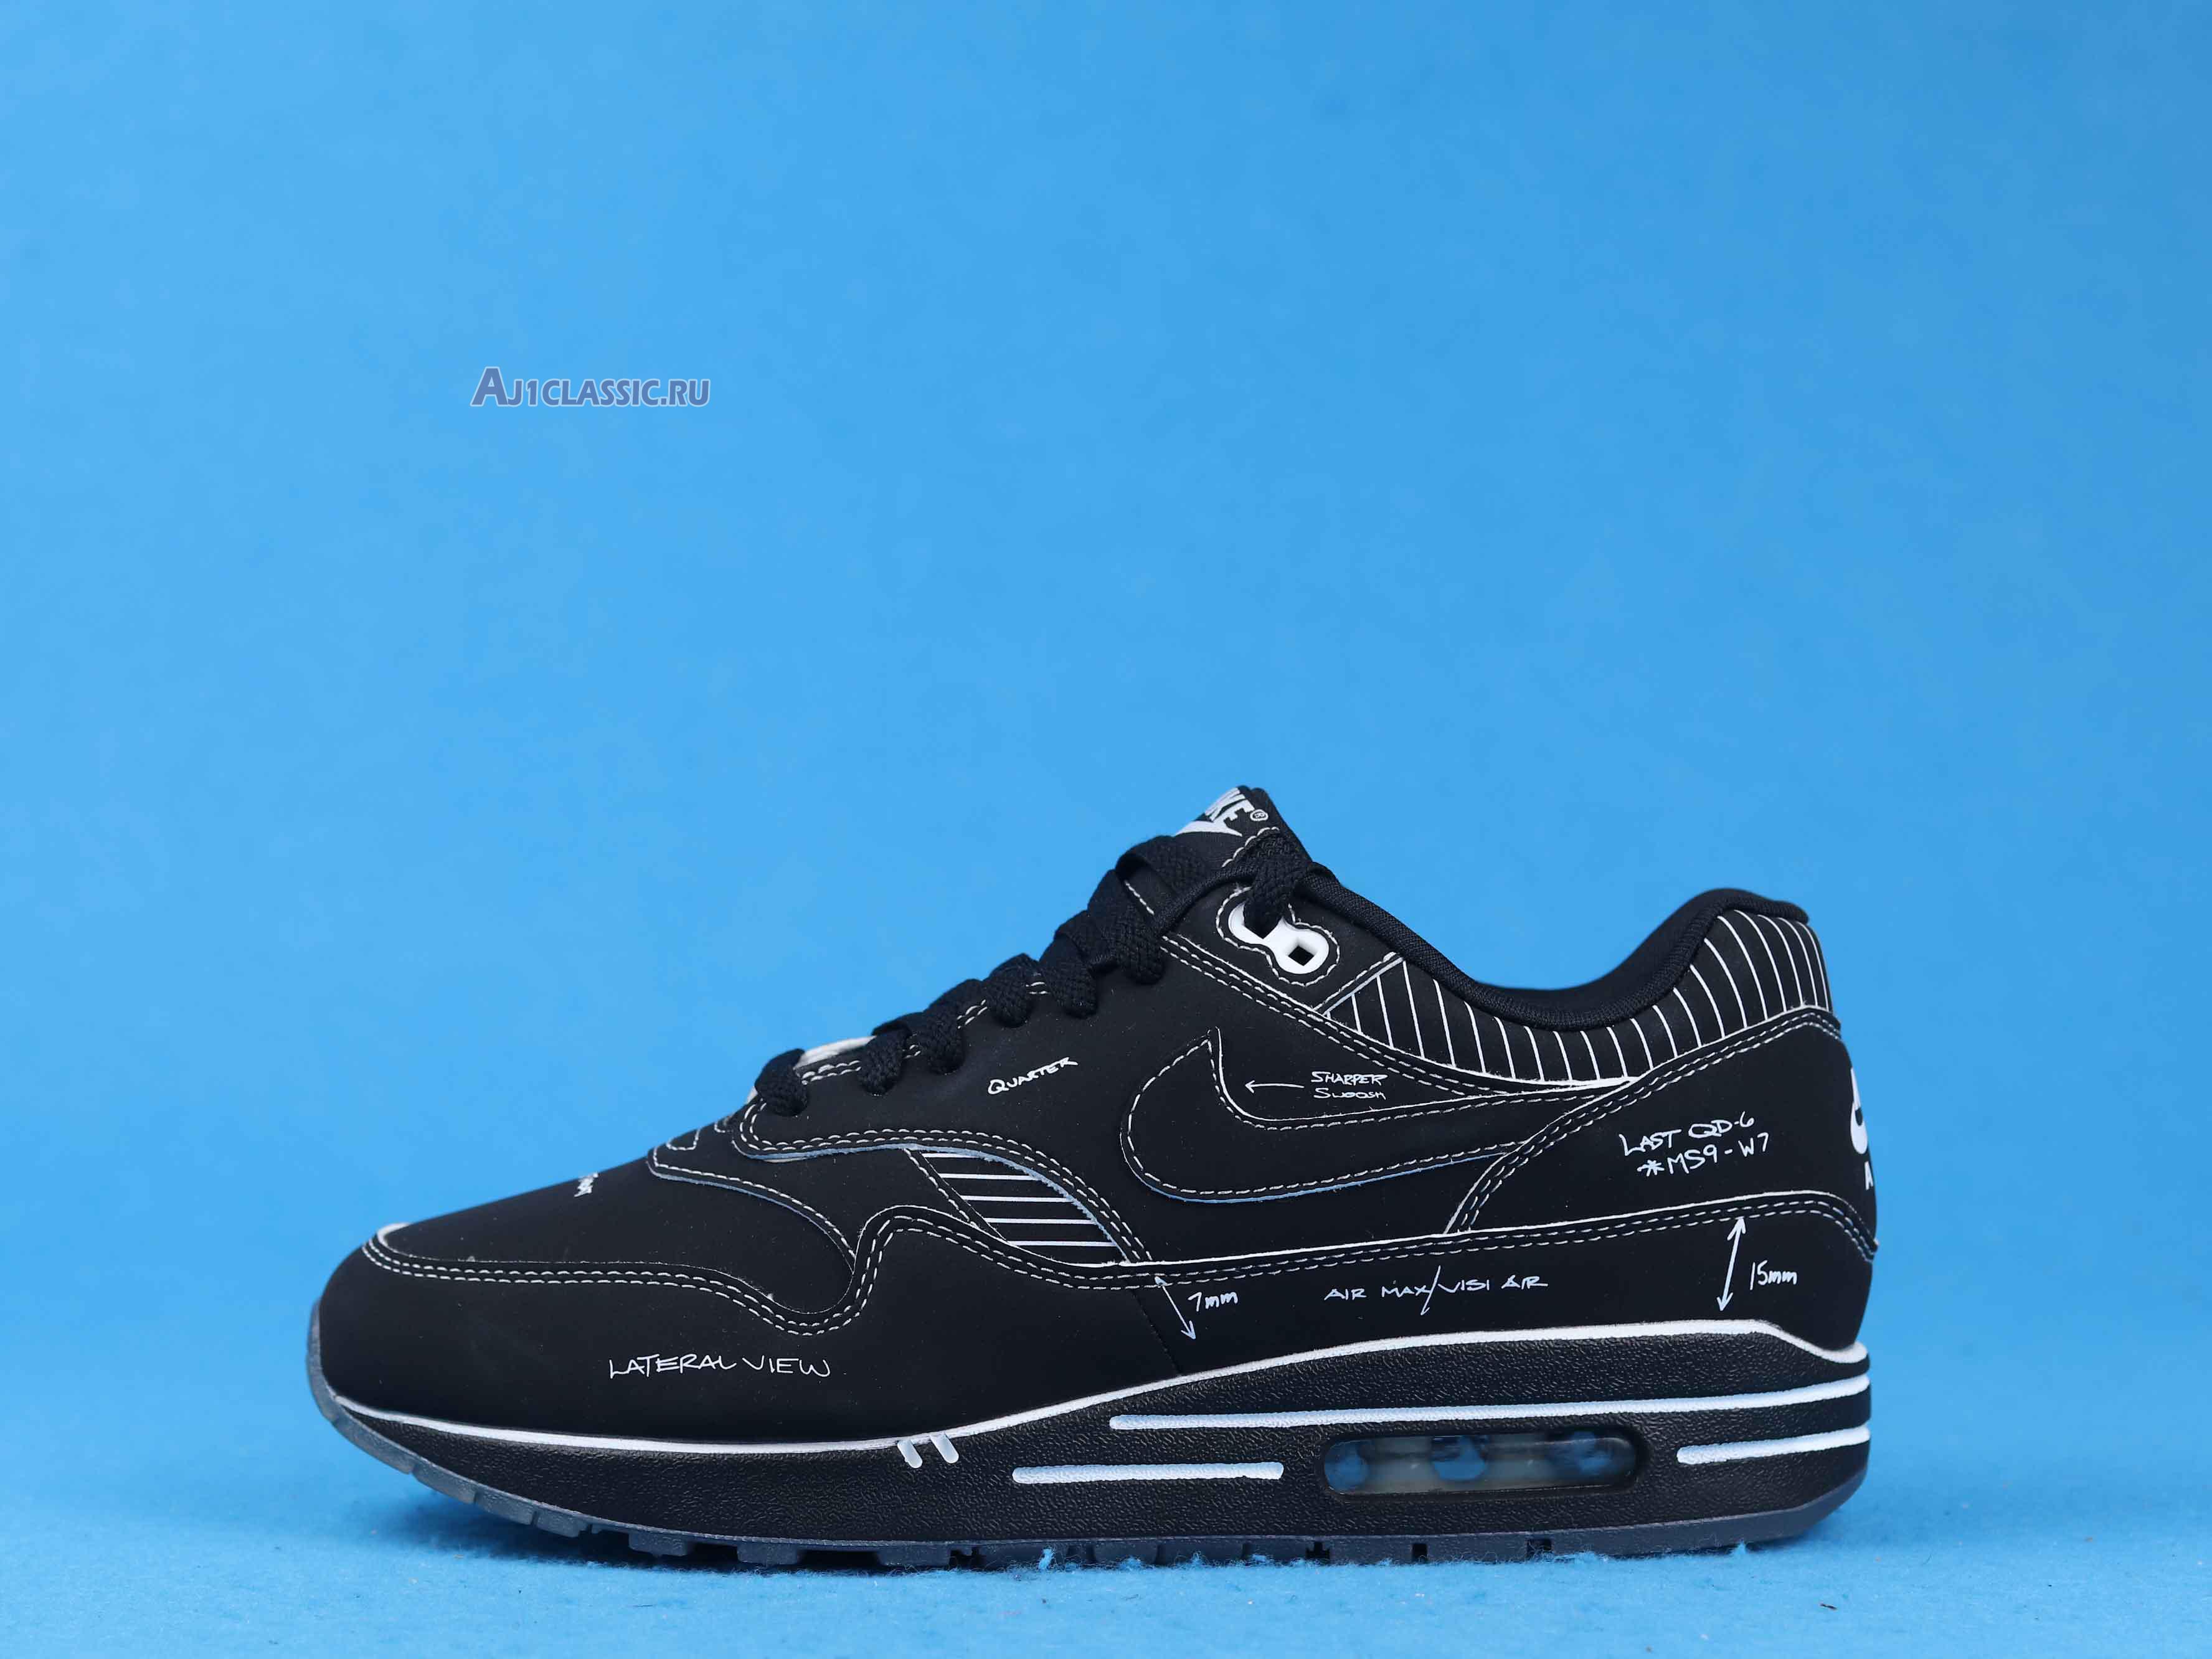 Nike Air Max 1 Sketch To Shelf - Black CJ4286-001 Black/White Sneakers